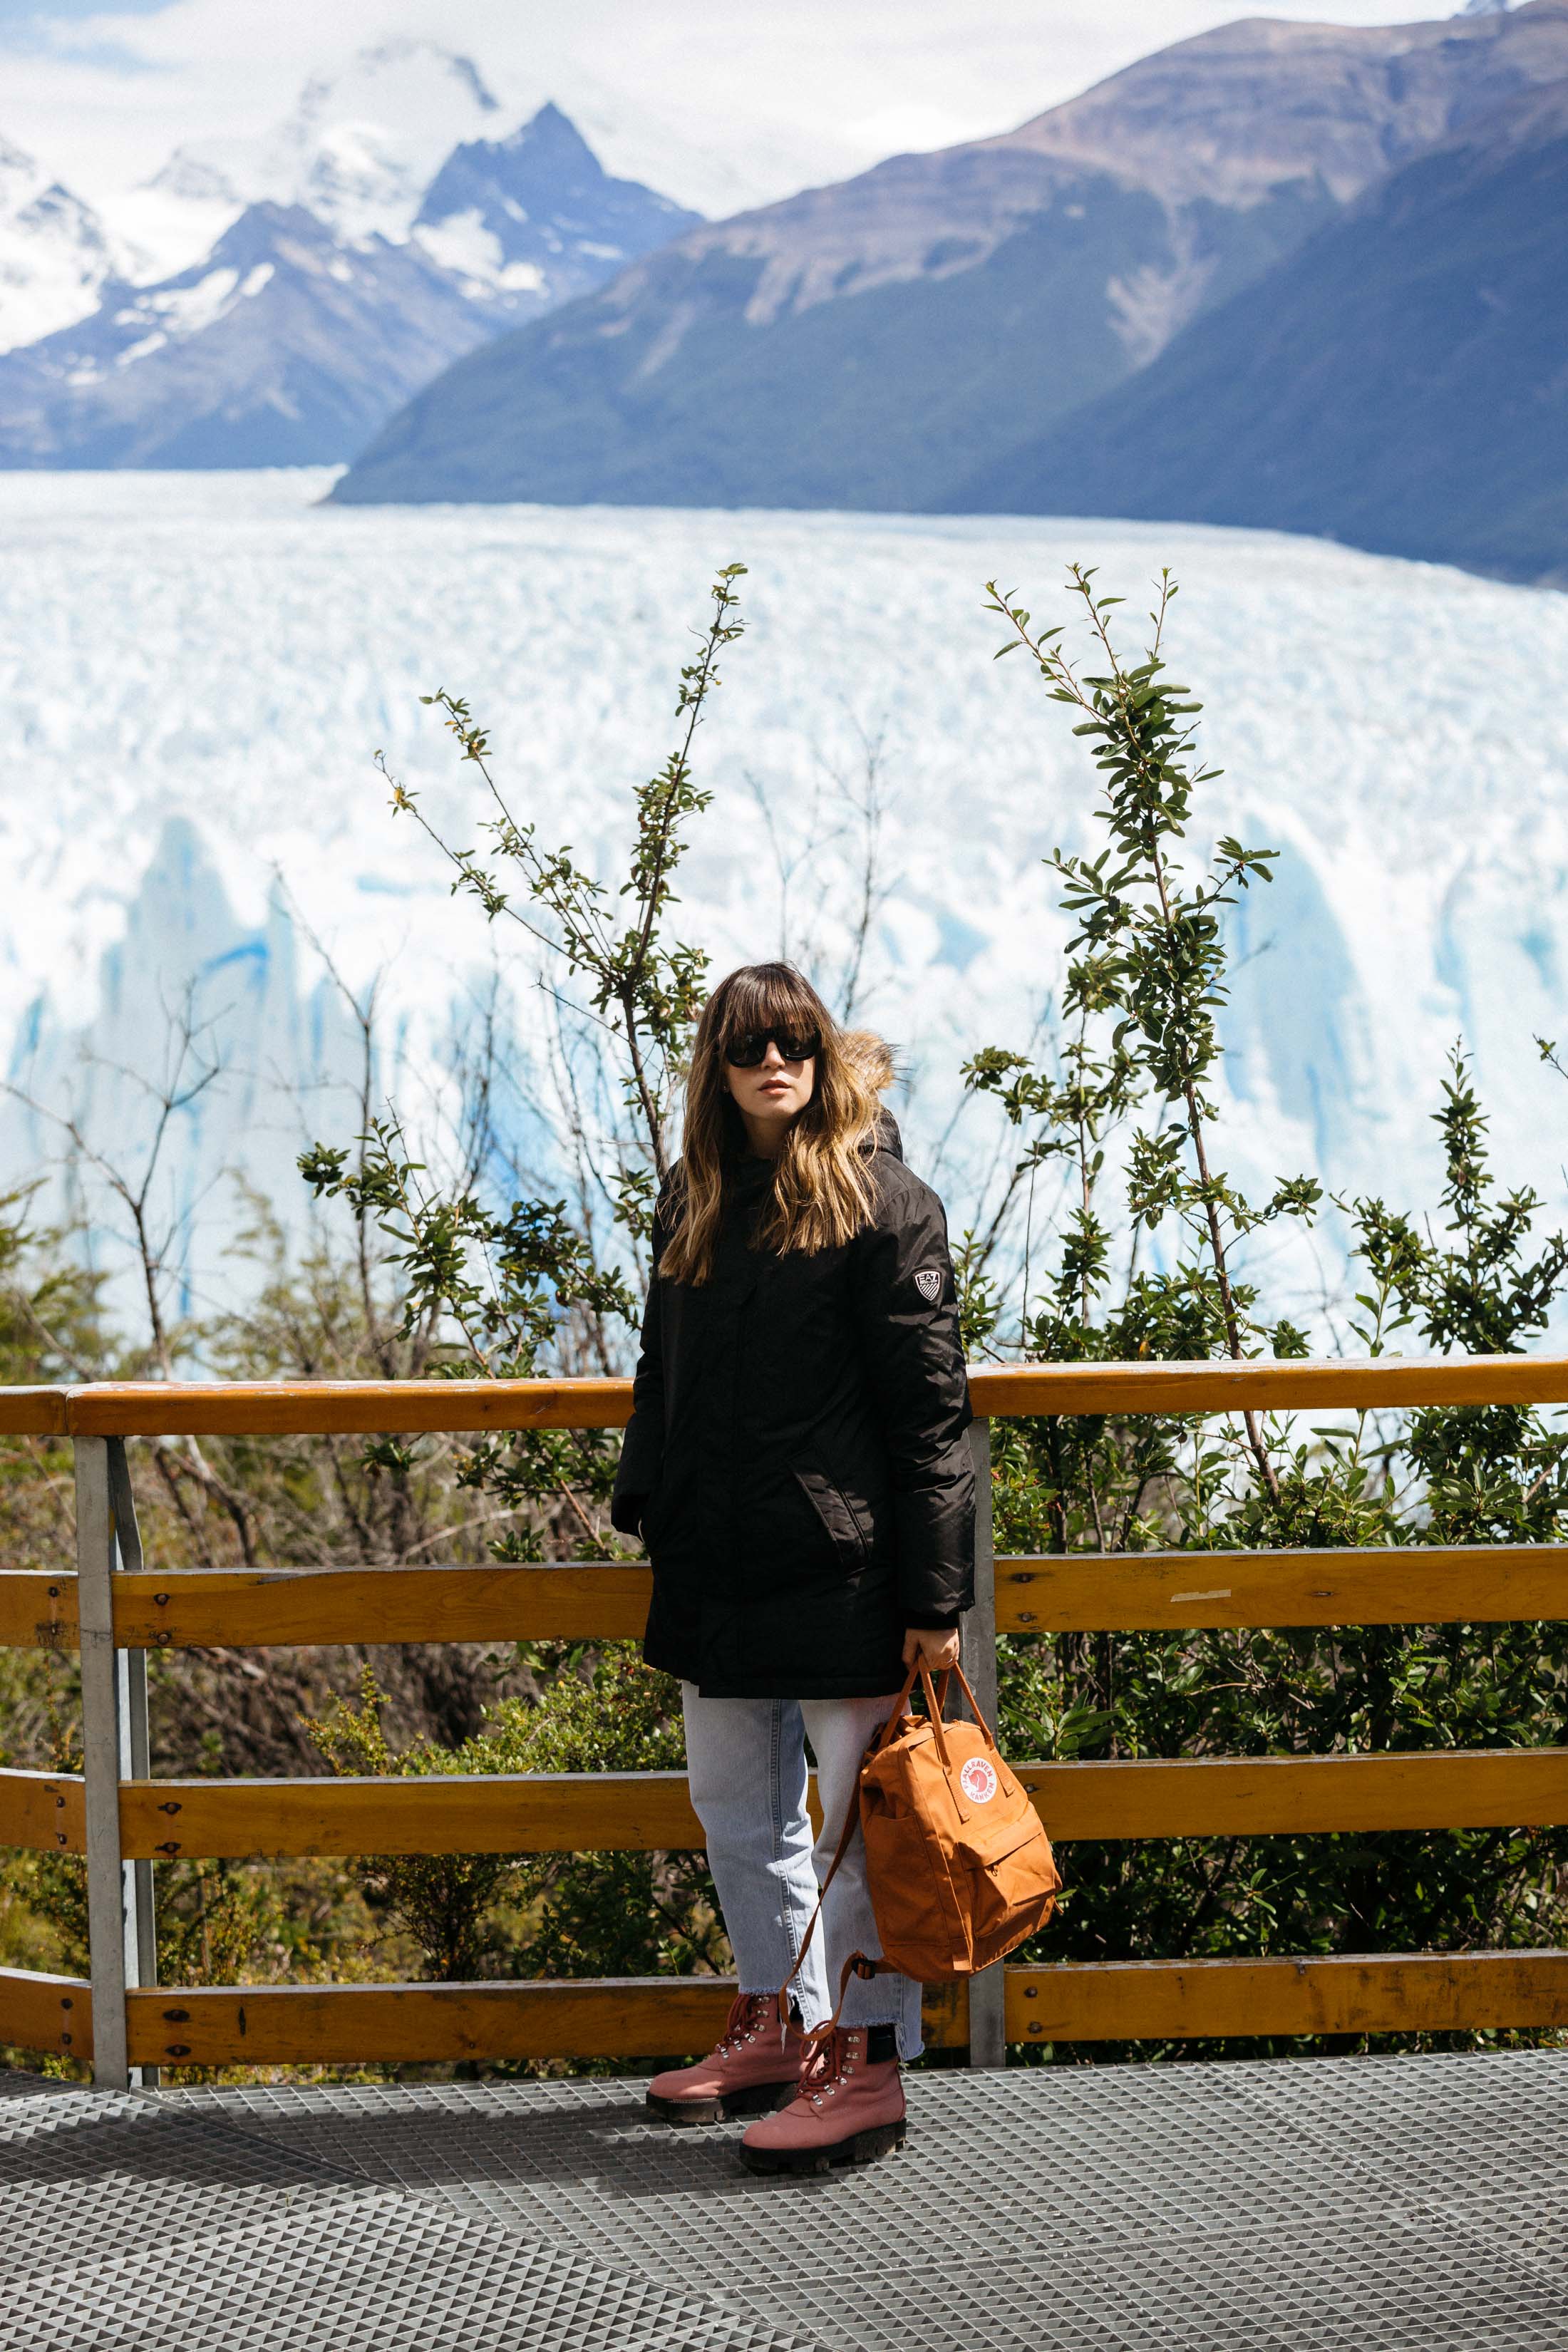 Maristella wears a black parka and pink Acne Telde boots at the Perito Moreno glacier in Patagonia